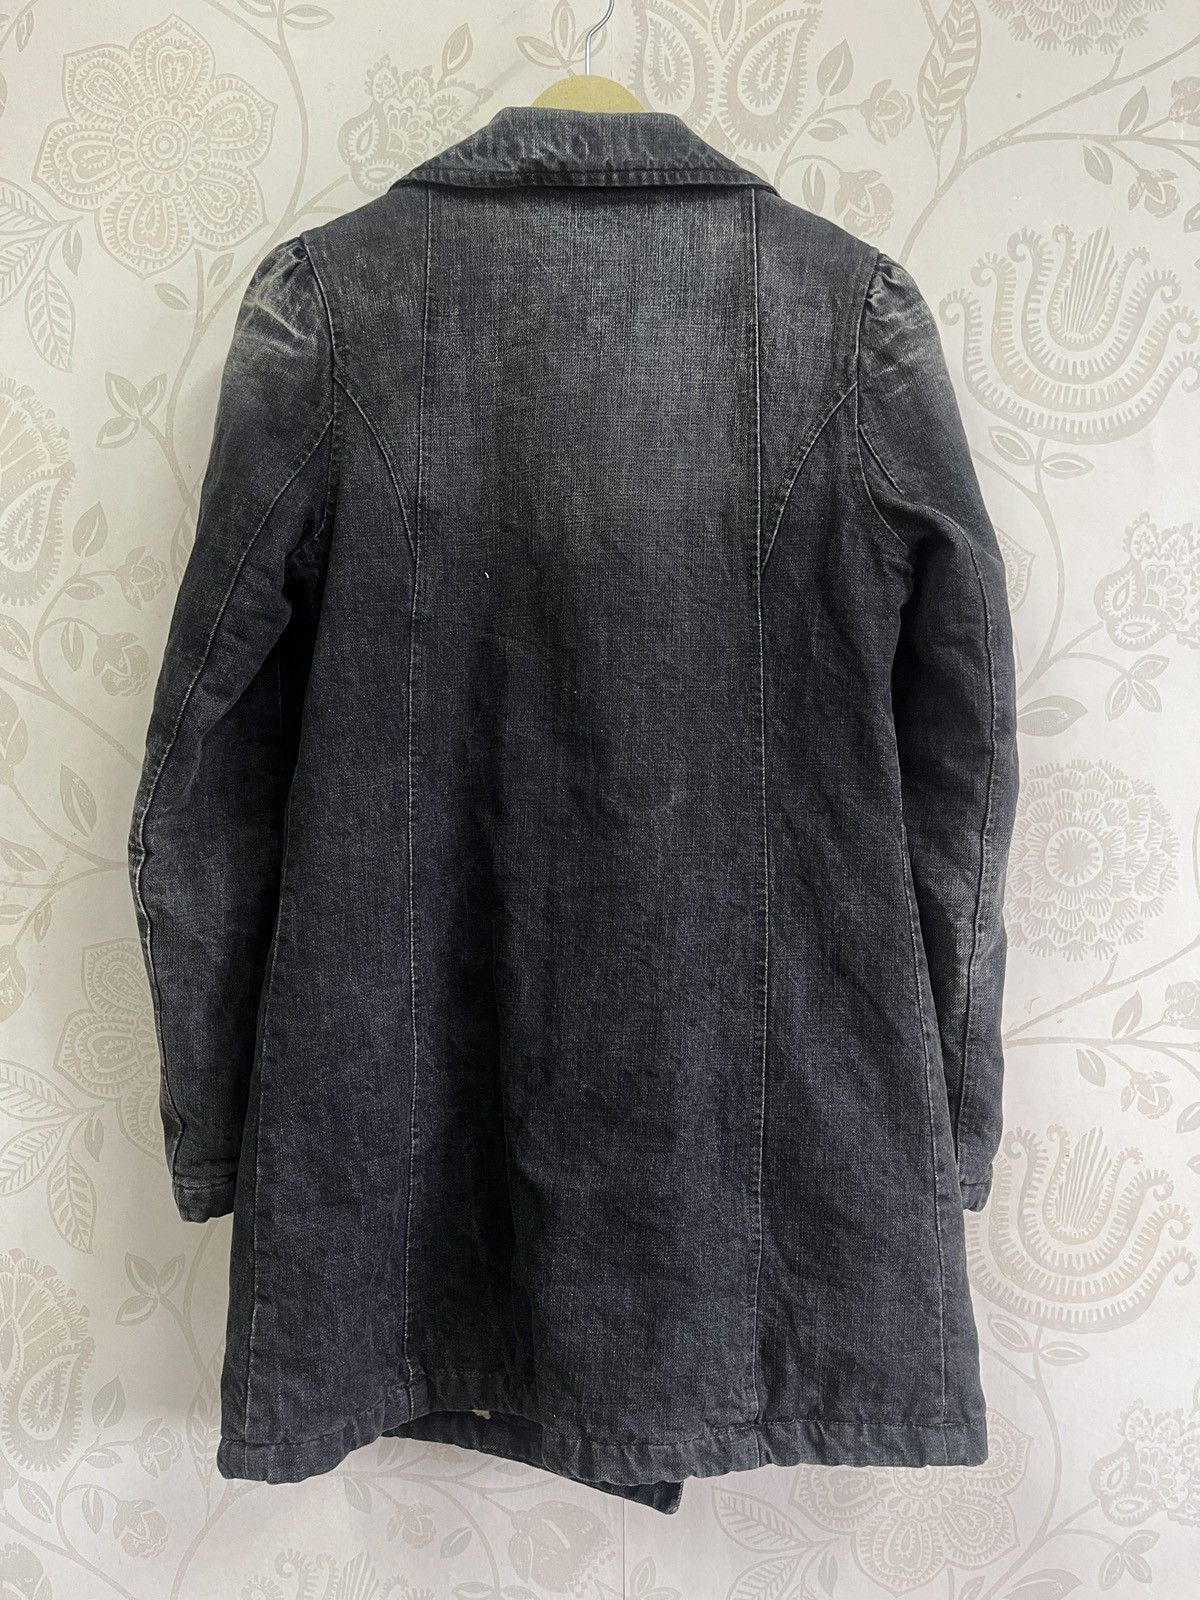 Black Vintage Cerruti Jeans Quilted Italian Jacket - 4